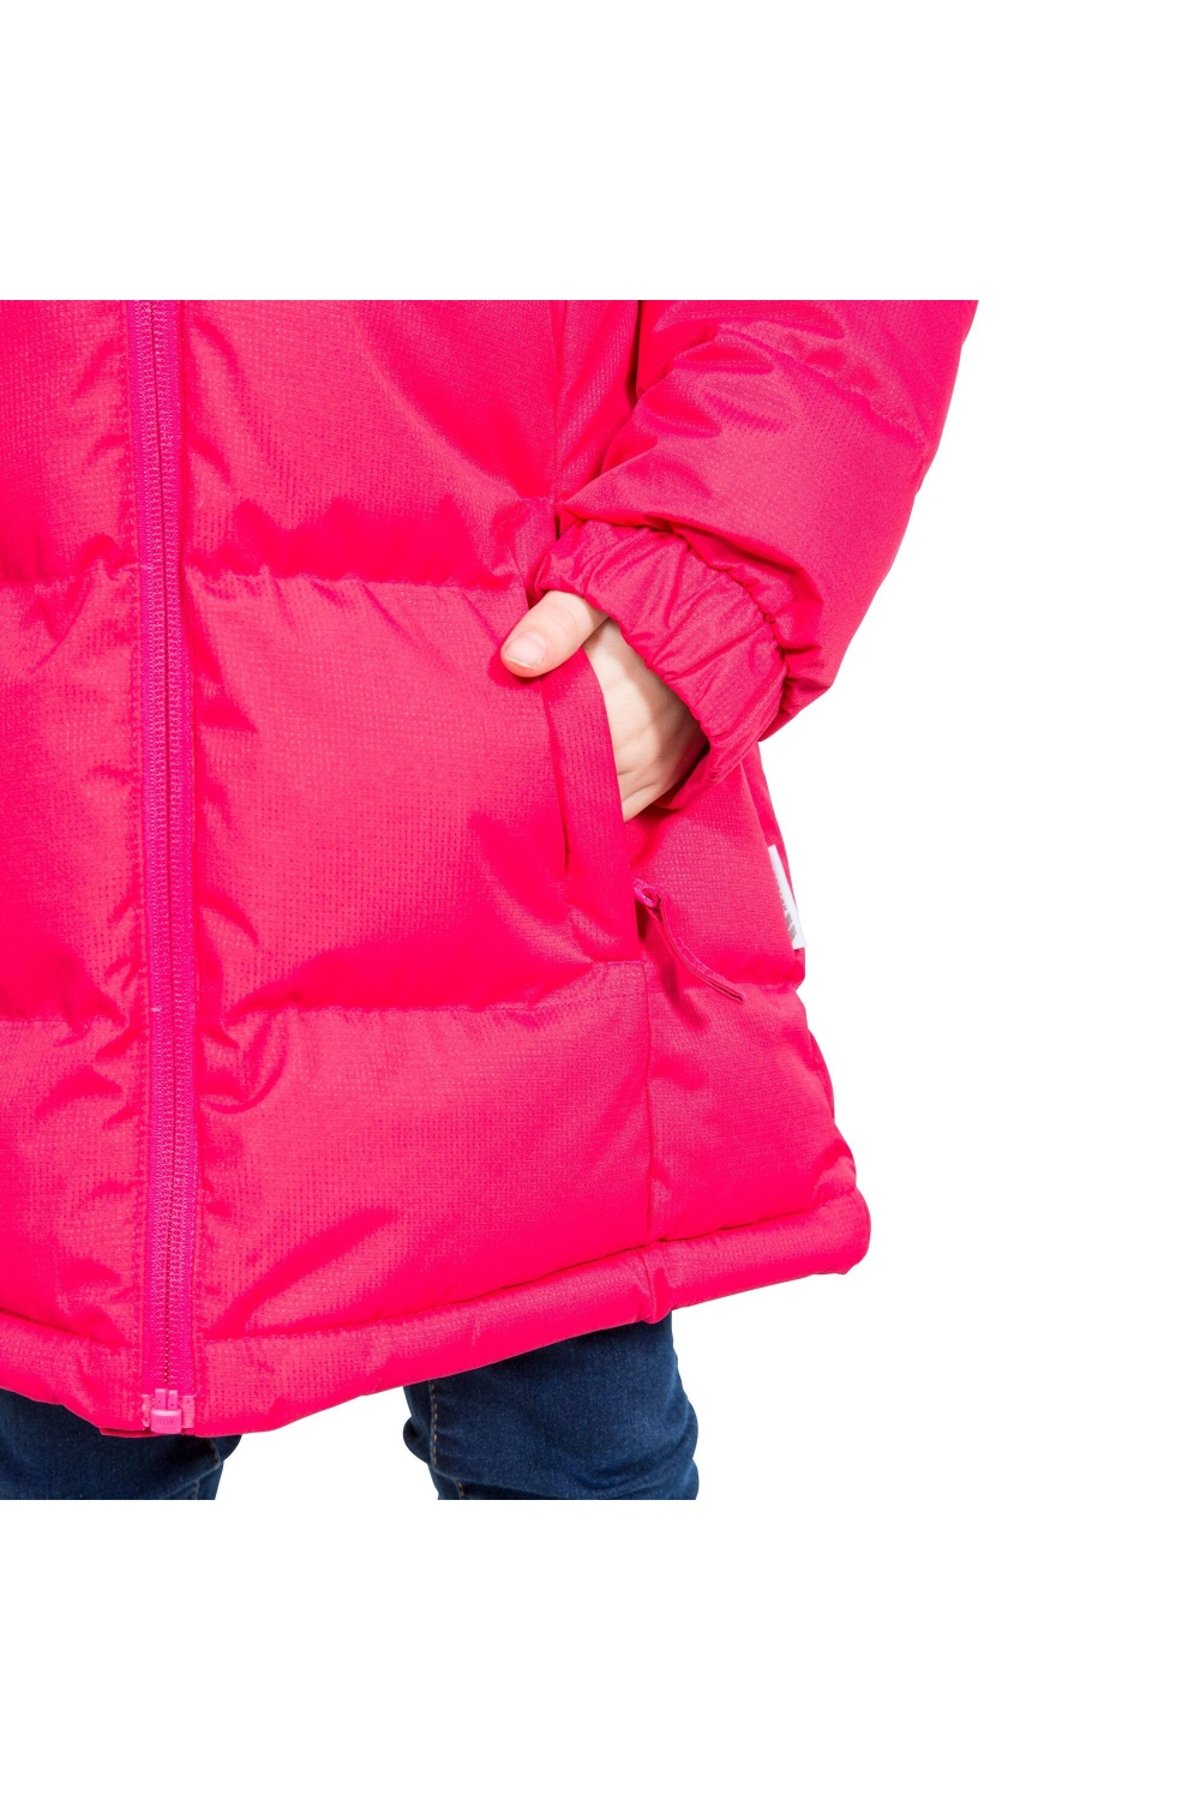 Tiffy Girls Casual Jacket in Deep Pink